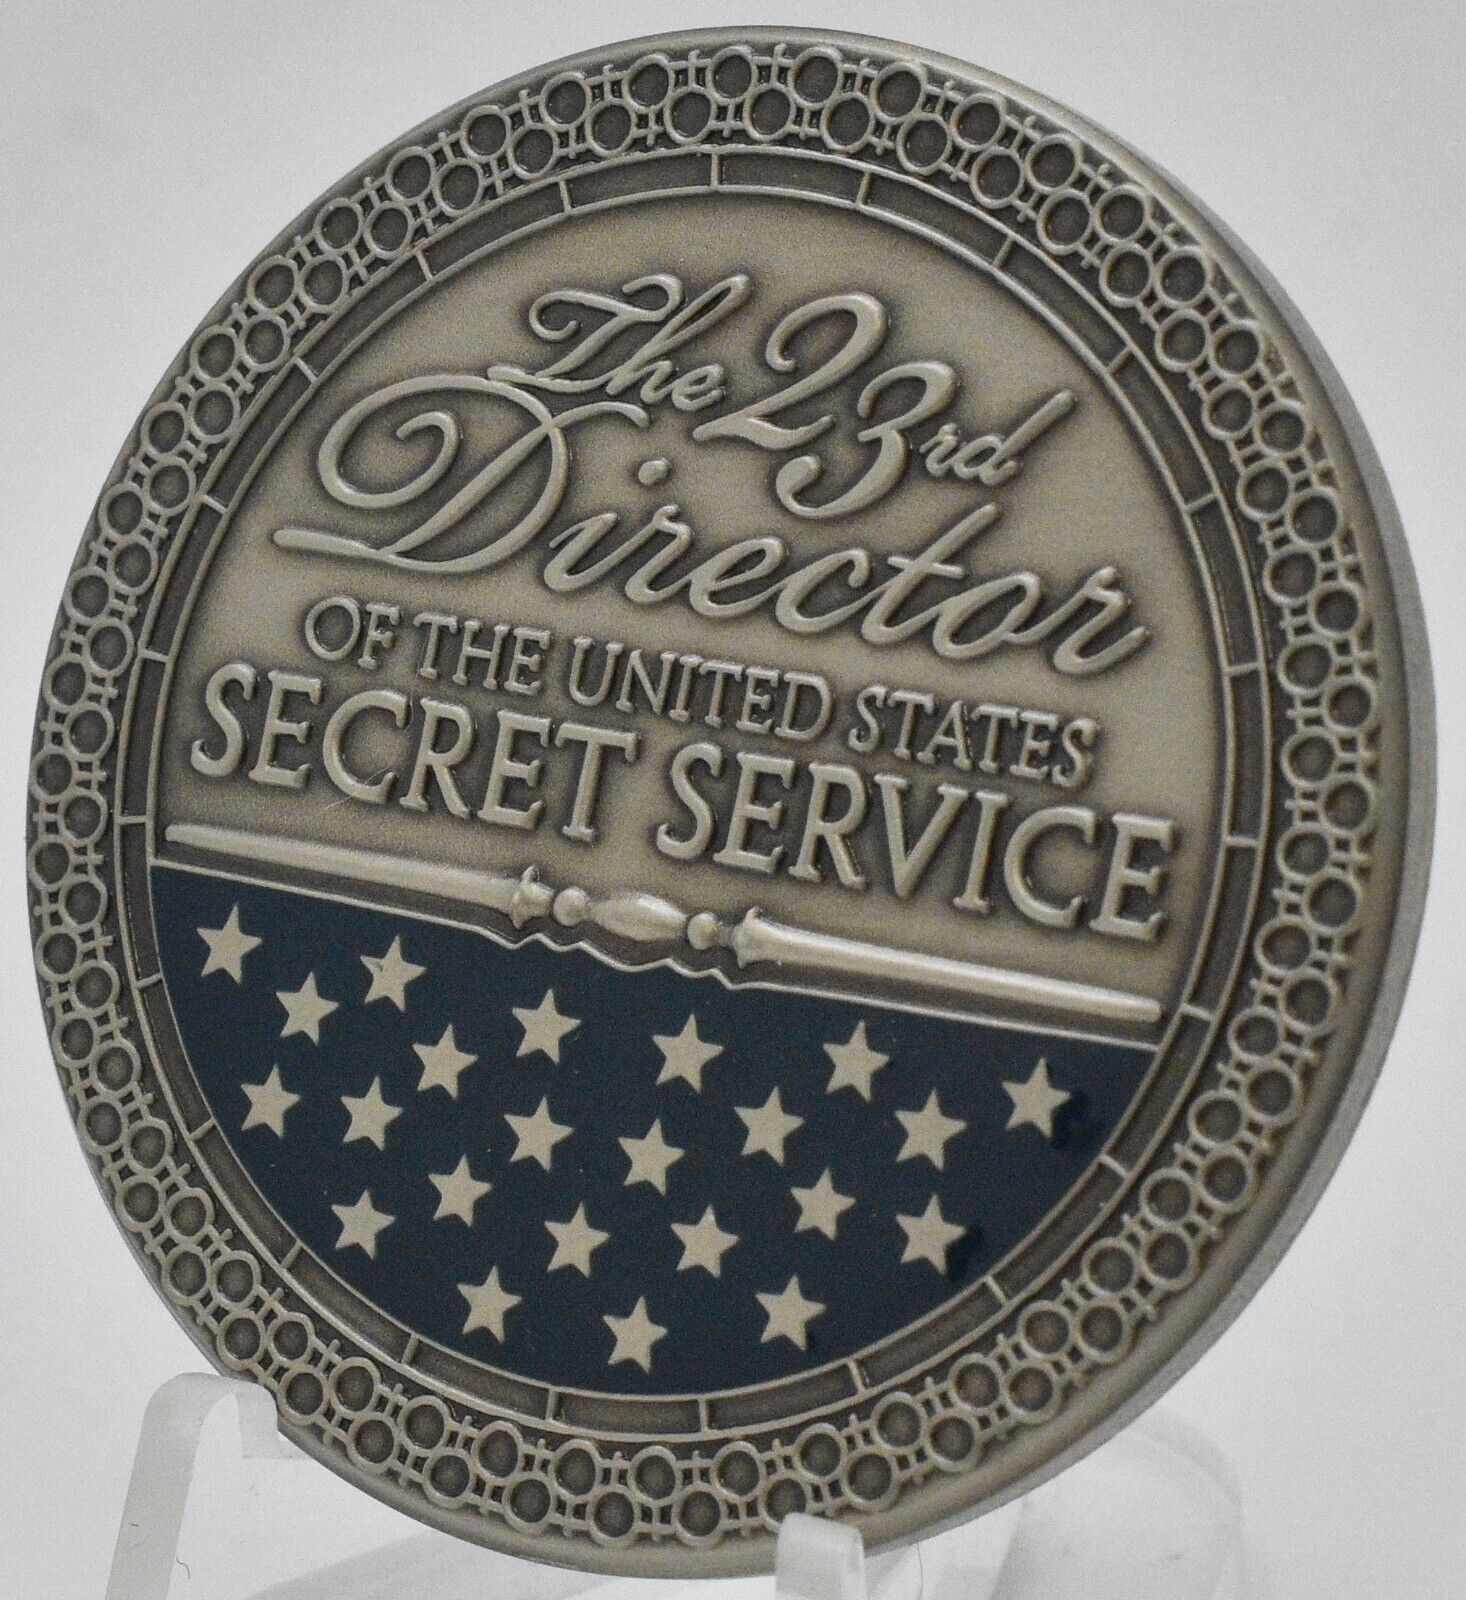 Secret Service Director Julia Pierson 2013 Barack Obama Challenge Coin